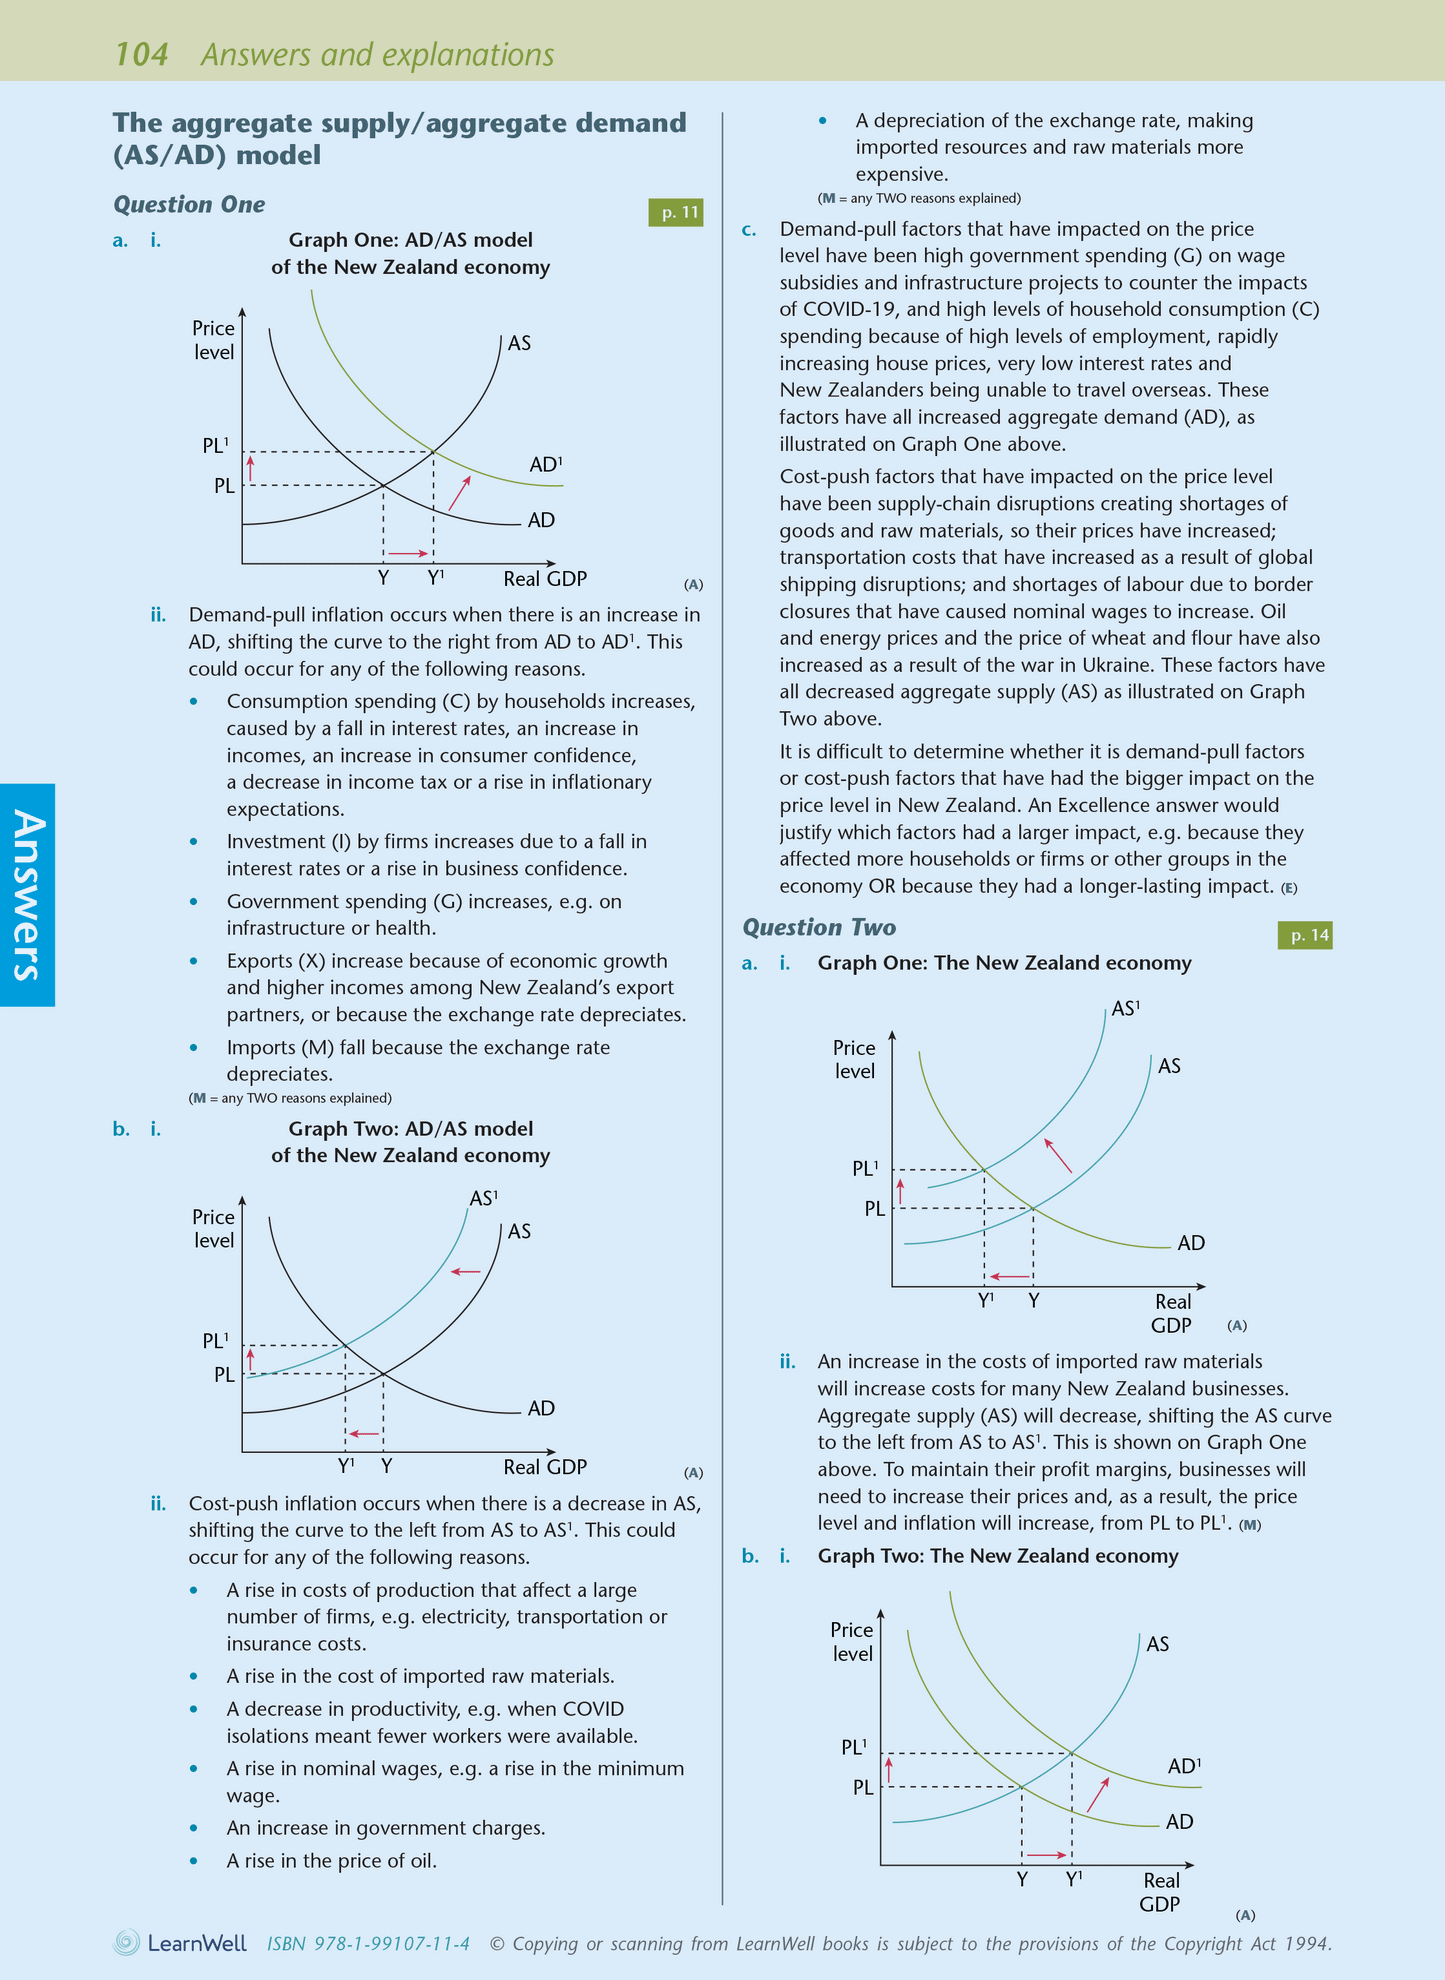 Level 2 Economics AME Workbook